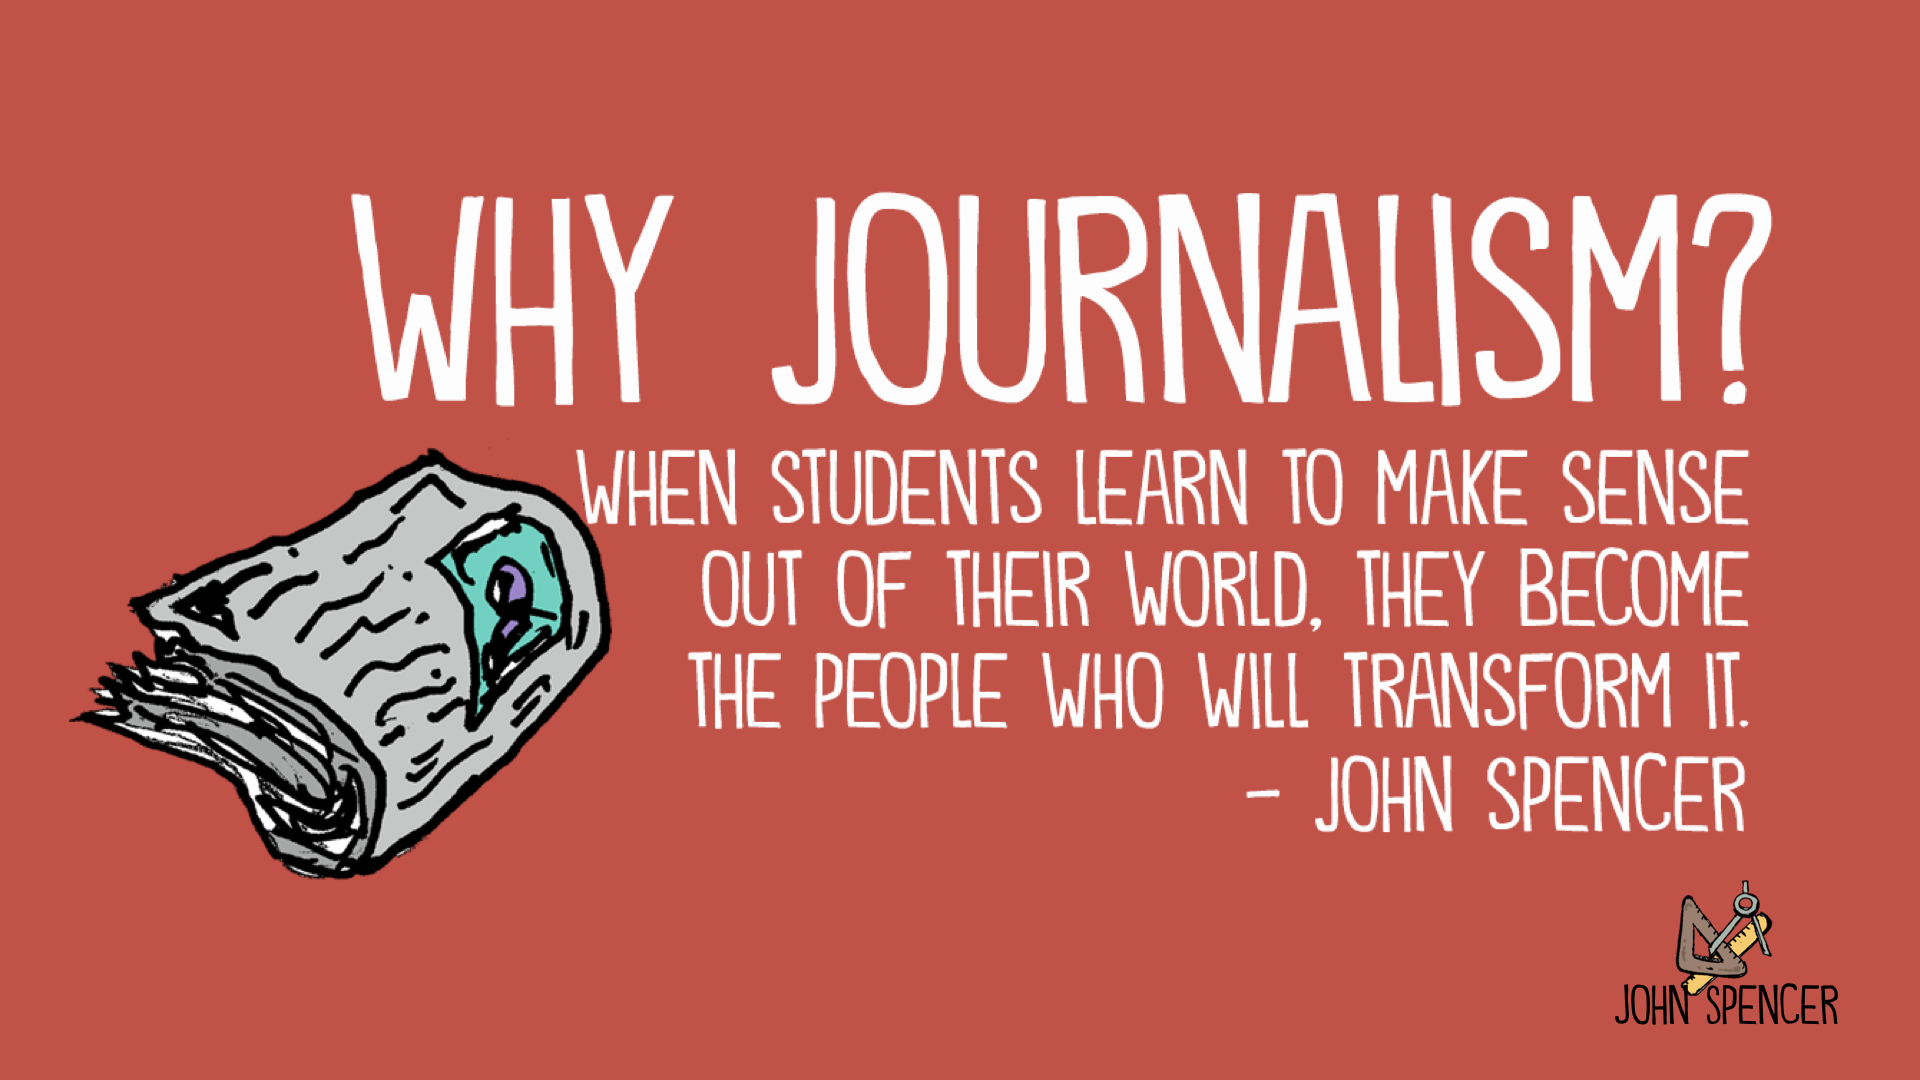 journalism quote - John Spencer